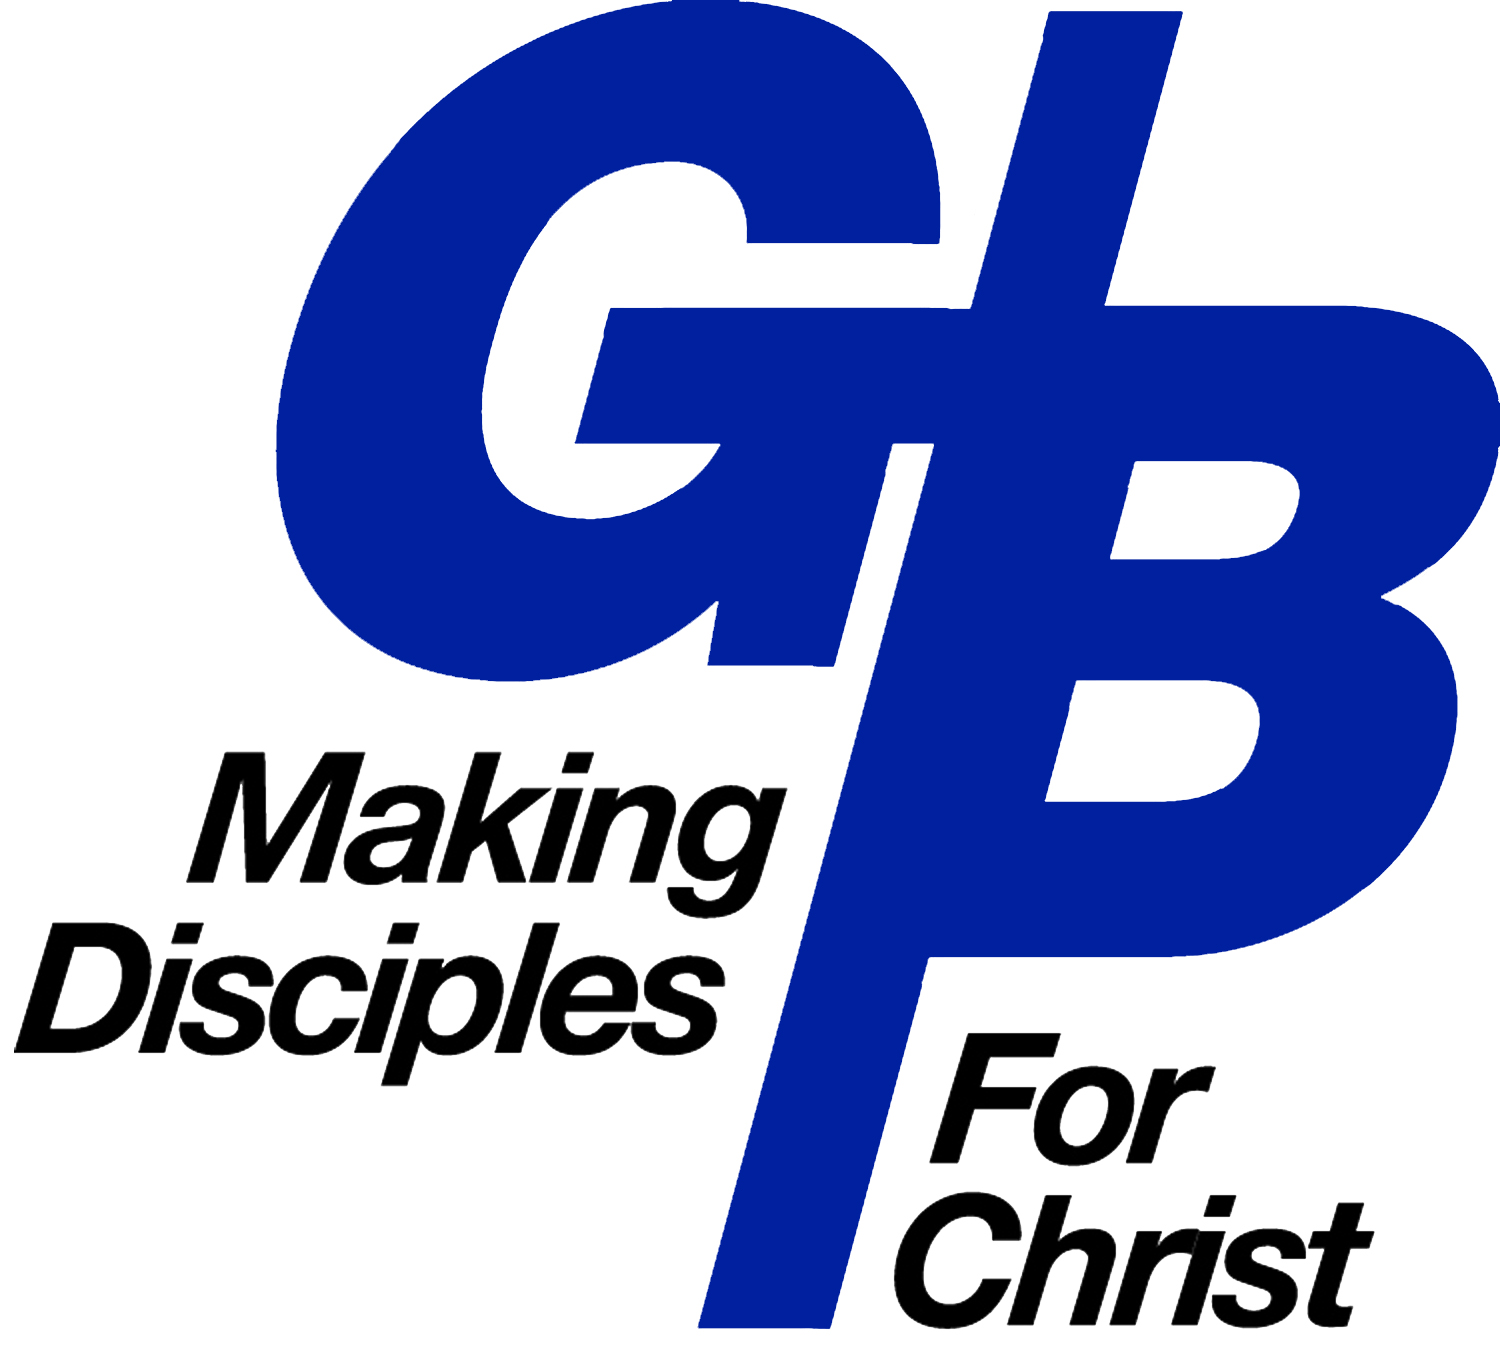 Gb Logos